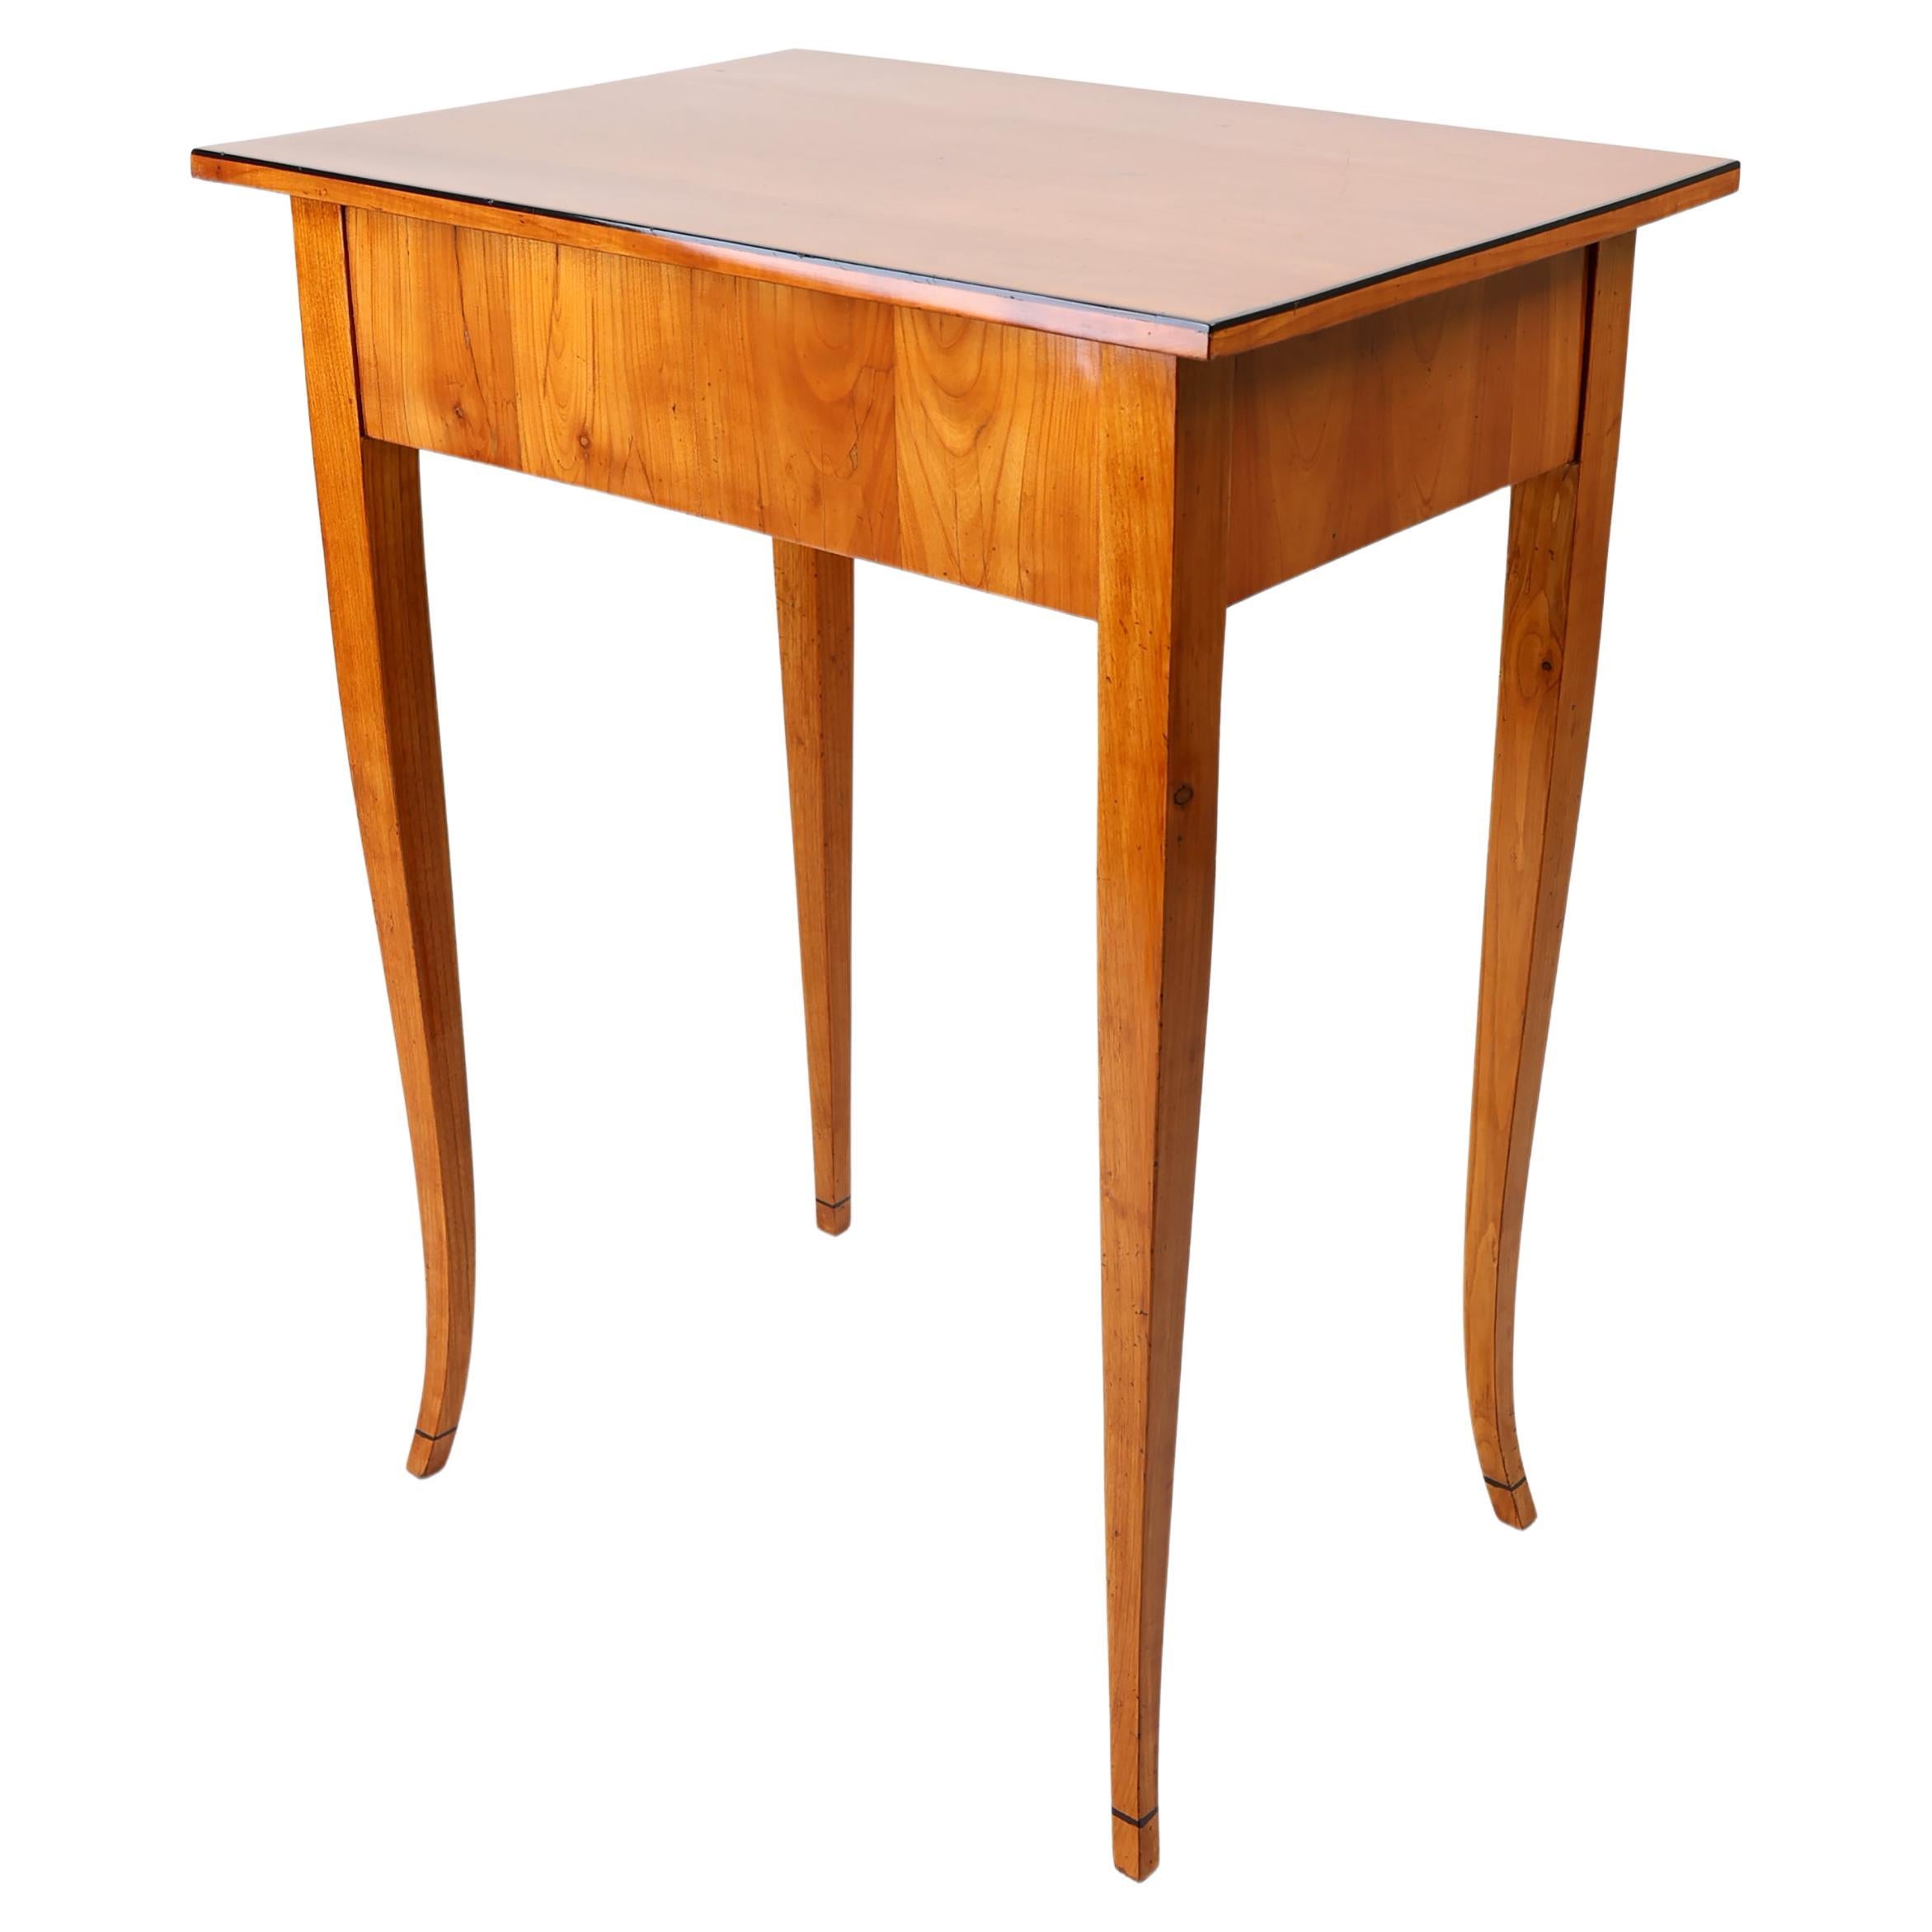 Early 19th Century Biedermeier Side Table For Sale